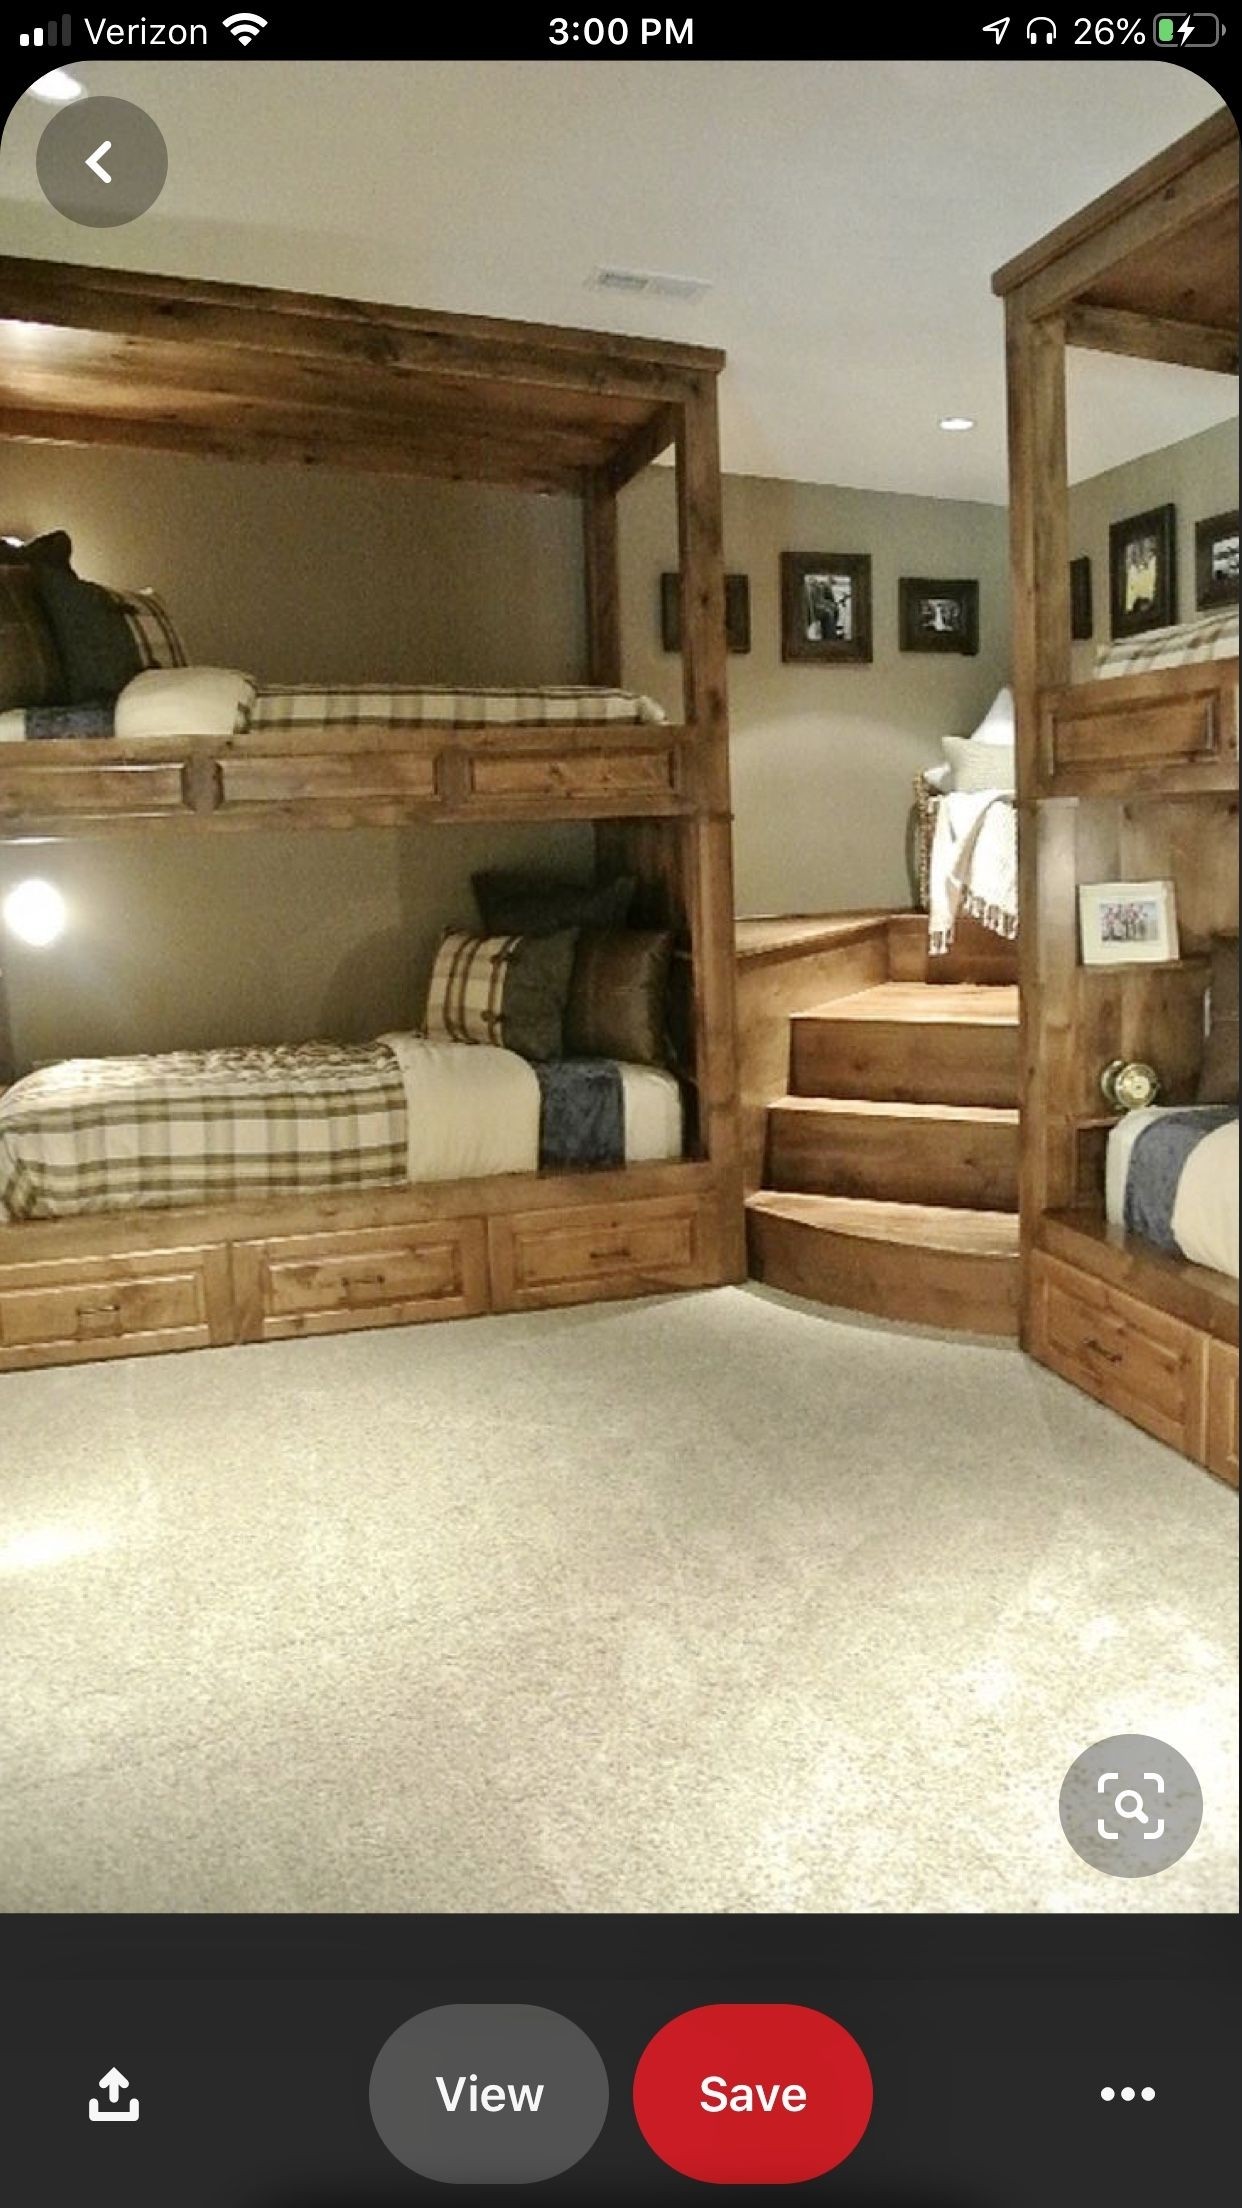 corner loft bunk beds